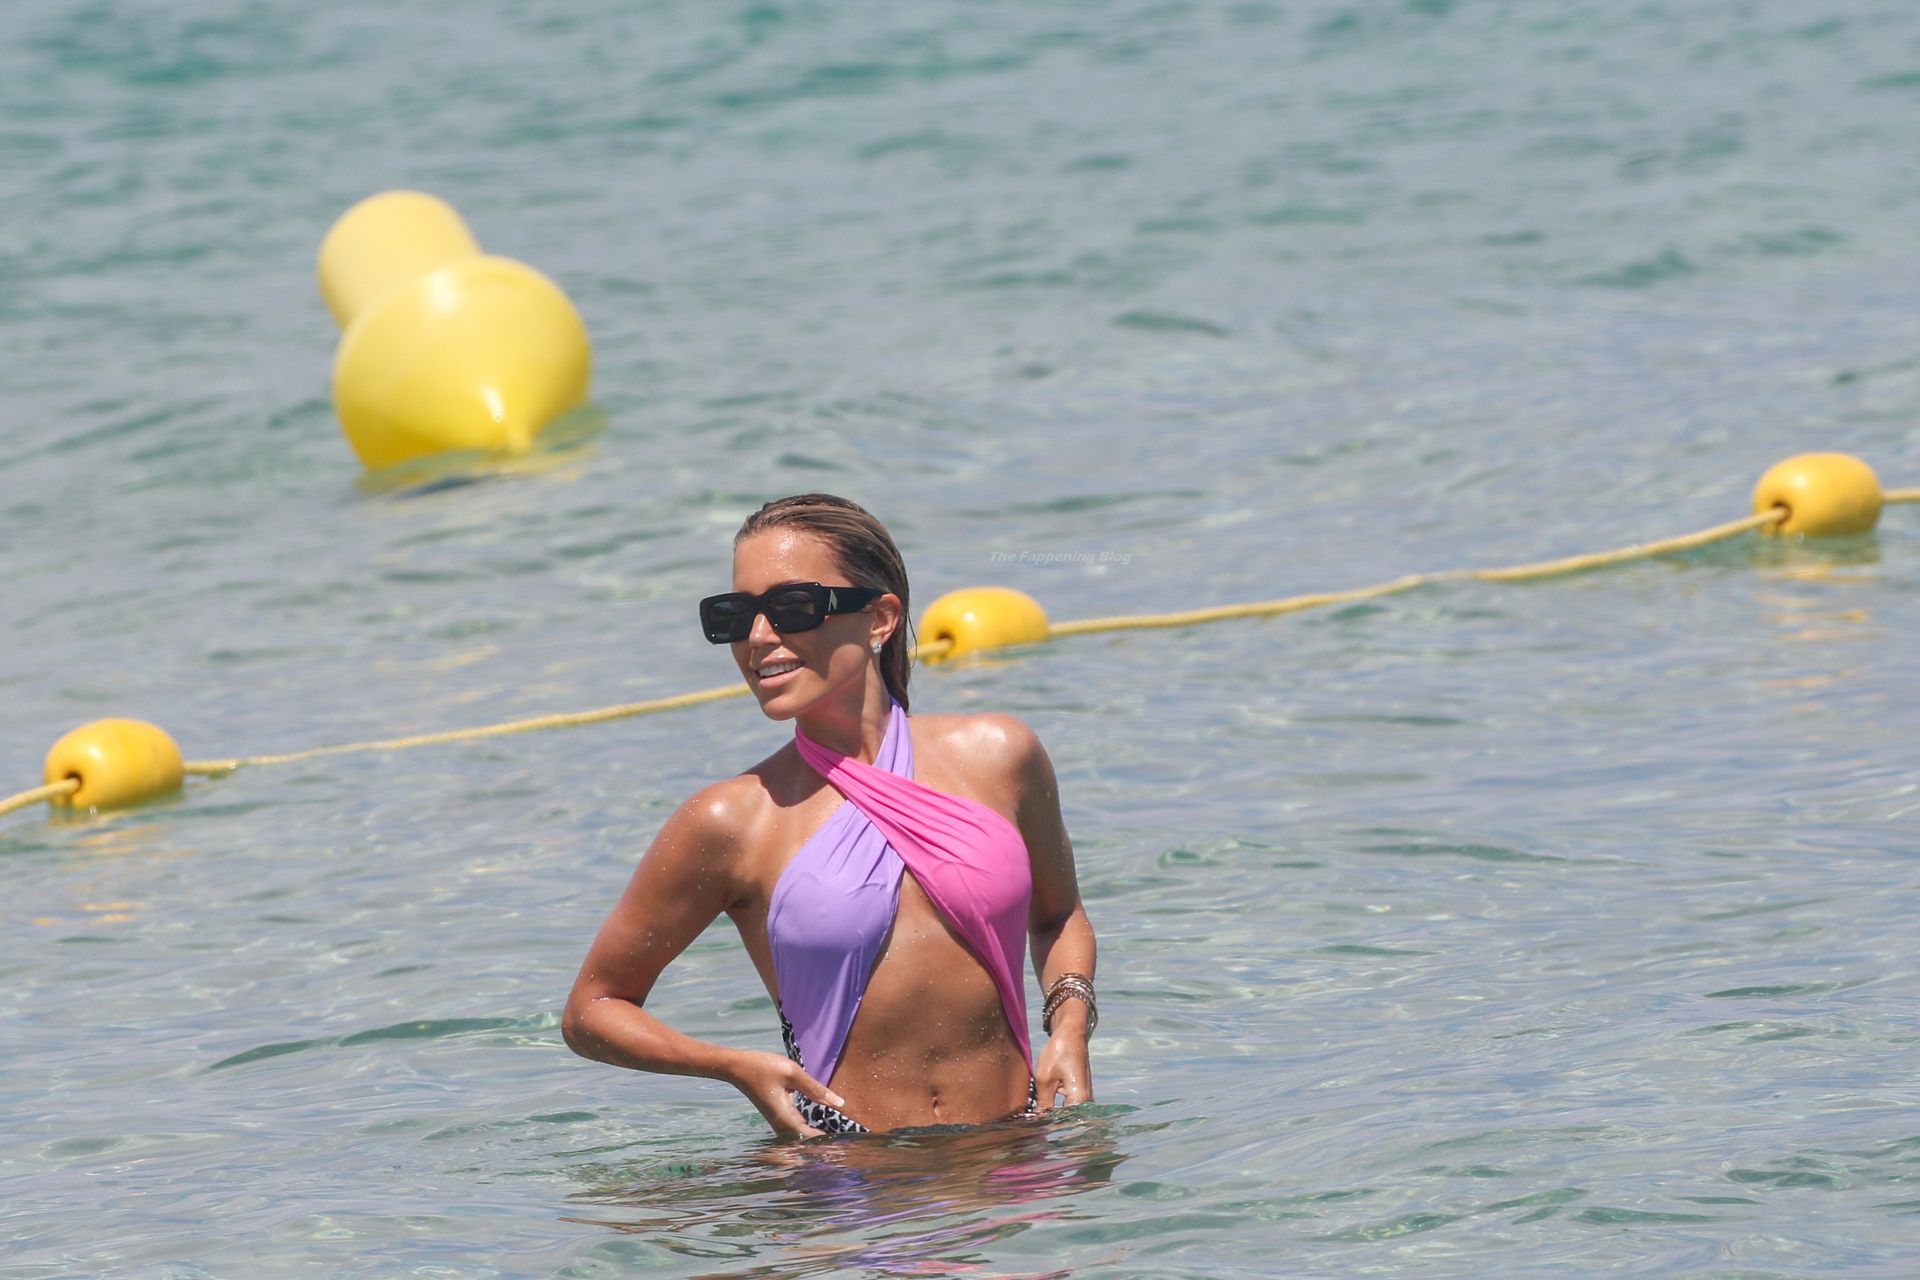 Sylvie Meis & Niclas Castello Enjoy a Beach Day in Saint Tropez (120 Photos)